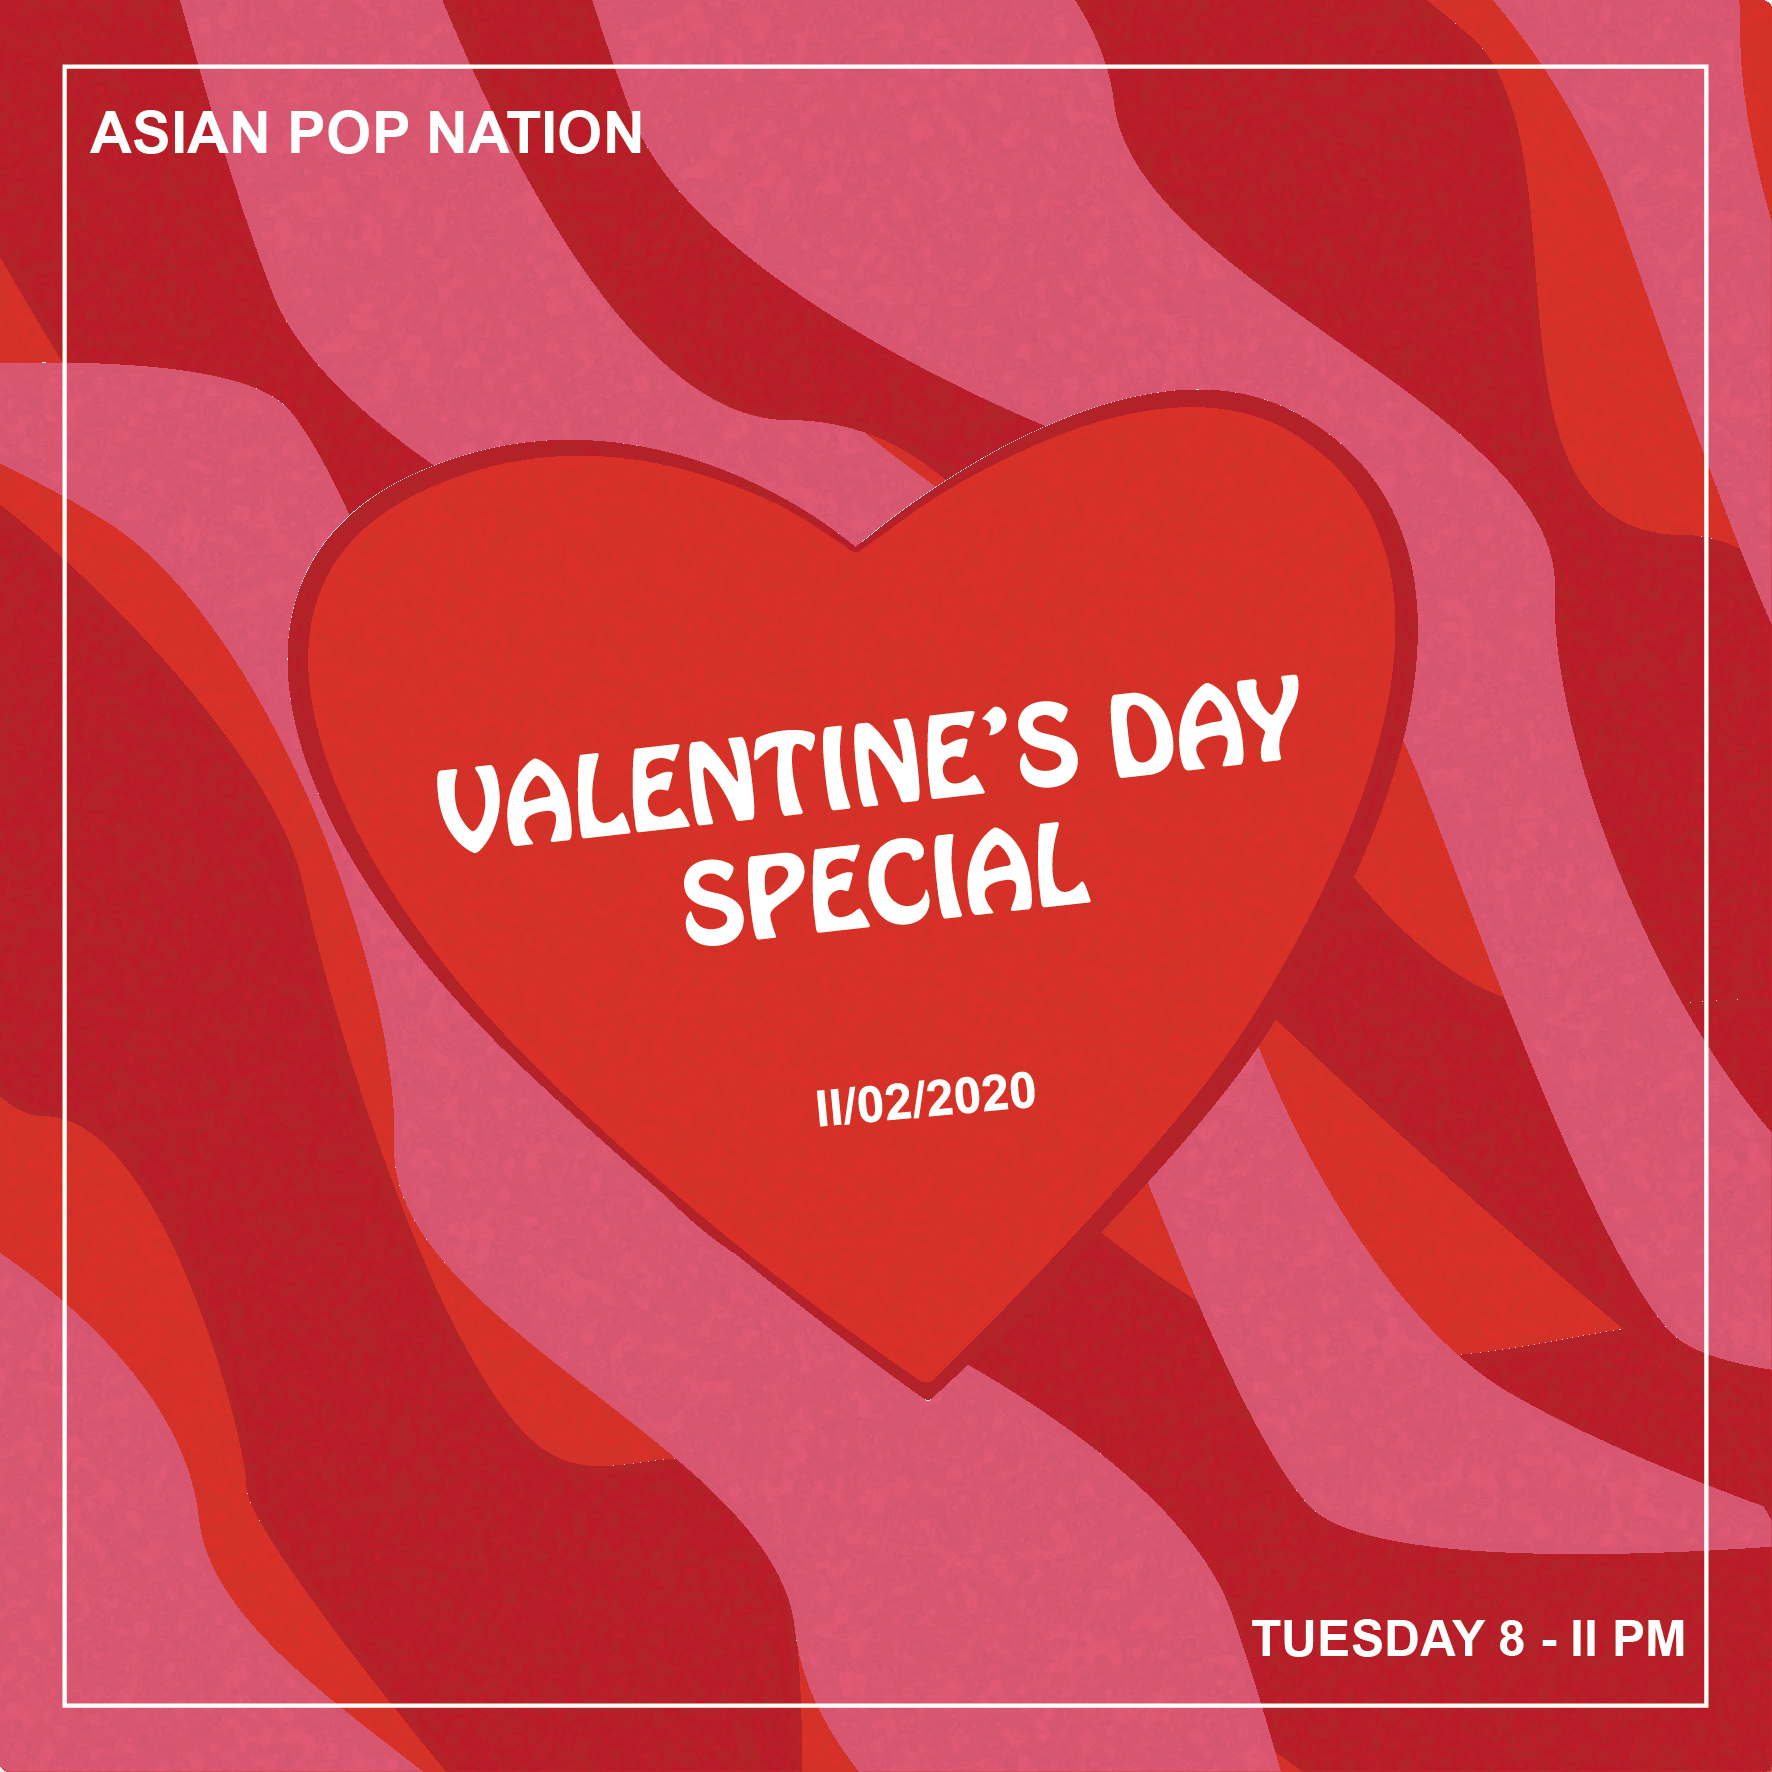 APN Season 1: Episode 3 (11/02/20) - Valentine's Day Special